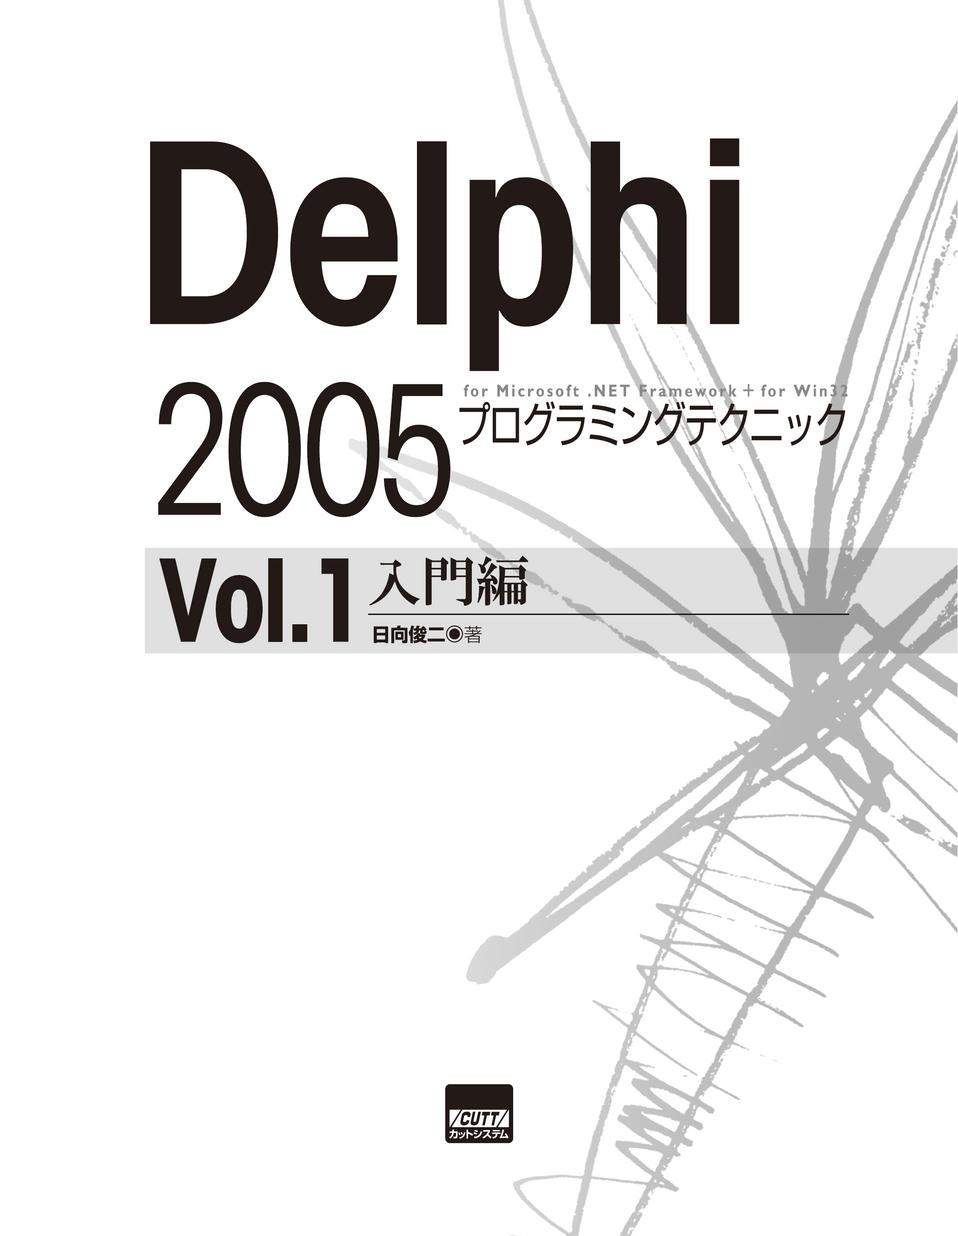 Delphi 2005プログラミングテクニック vol.3(コンポーネント編―For Microsoft.NET Framewo Windowsフォームコンポーネント [単行本] 日向 俊二